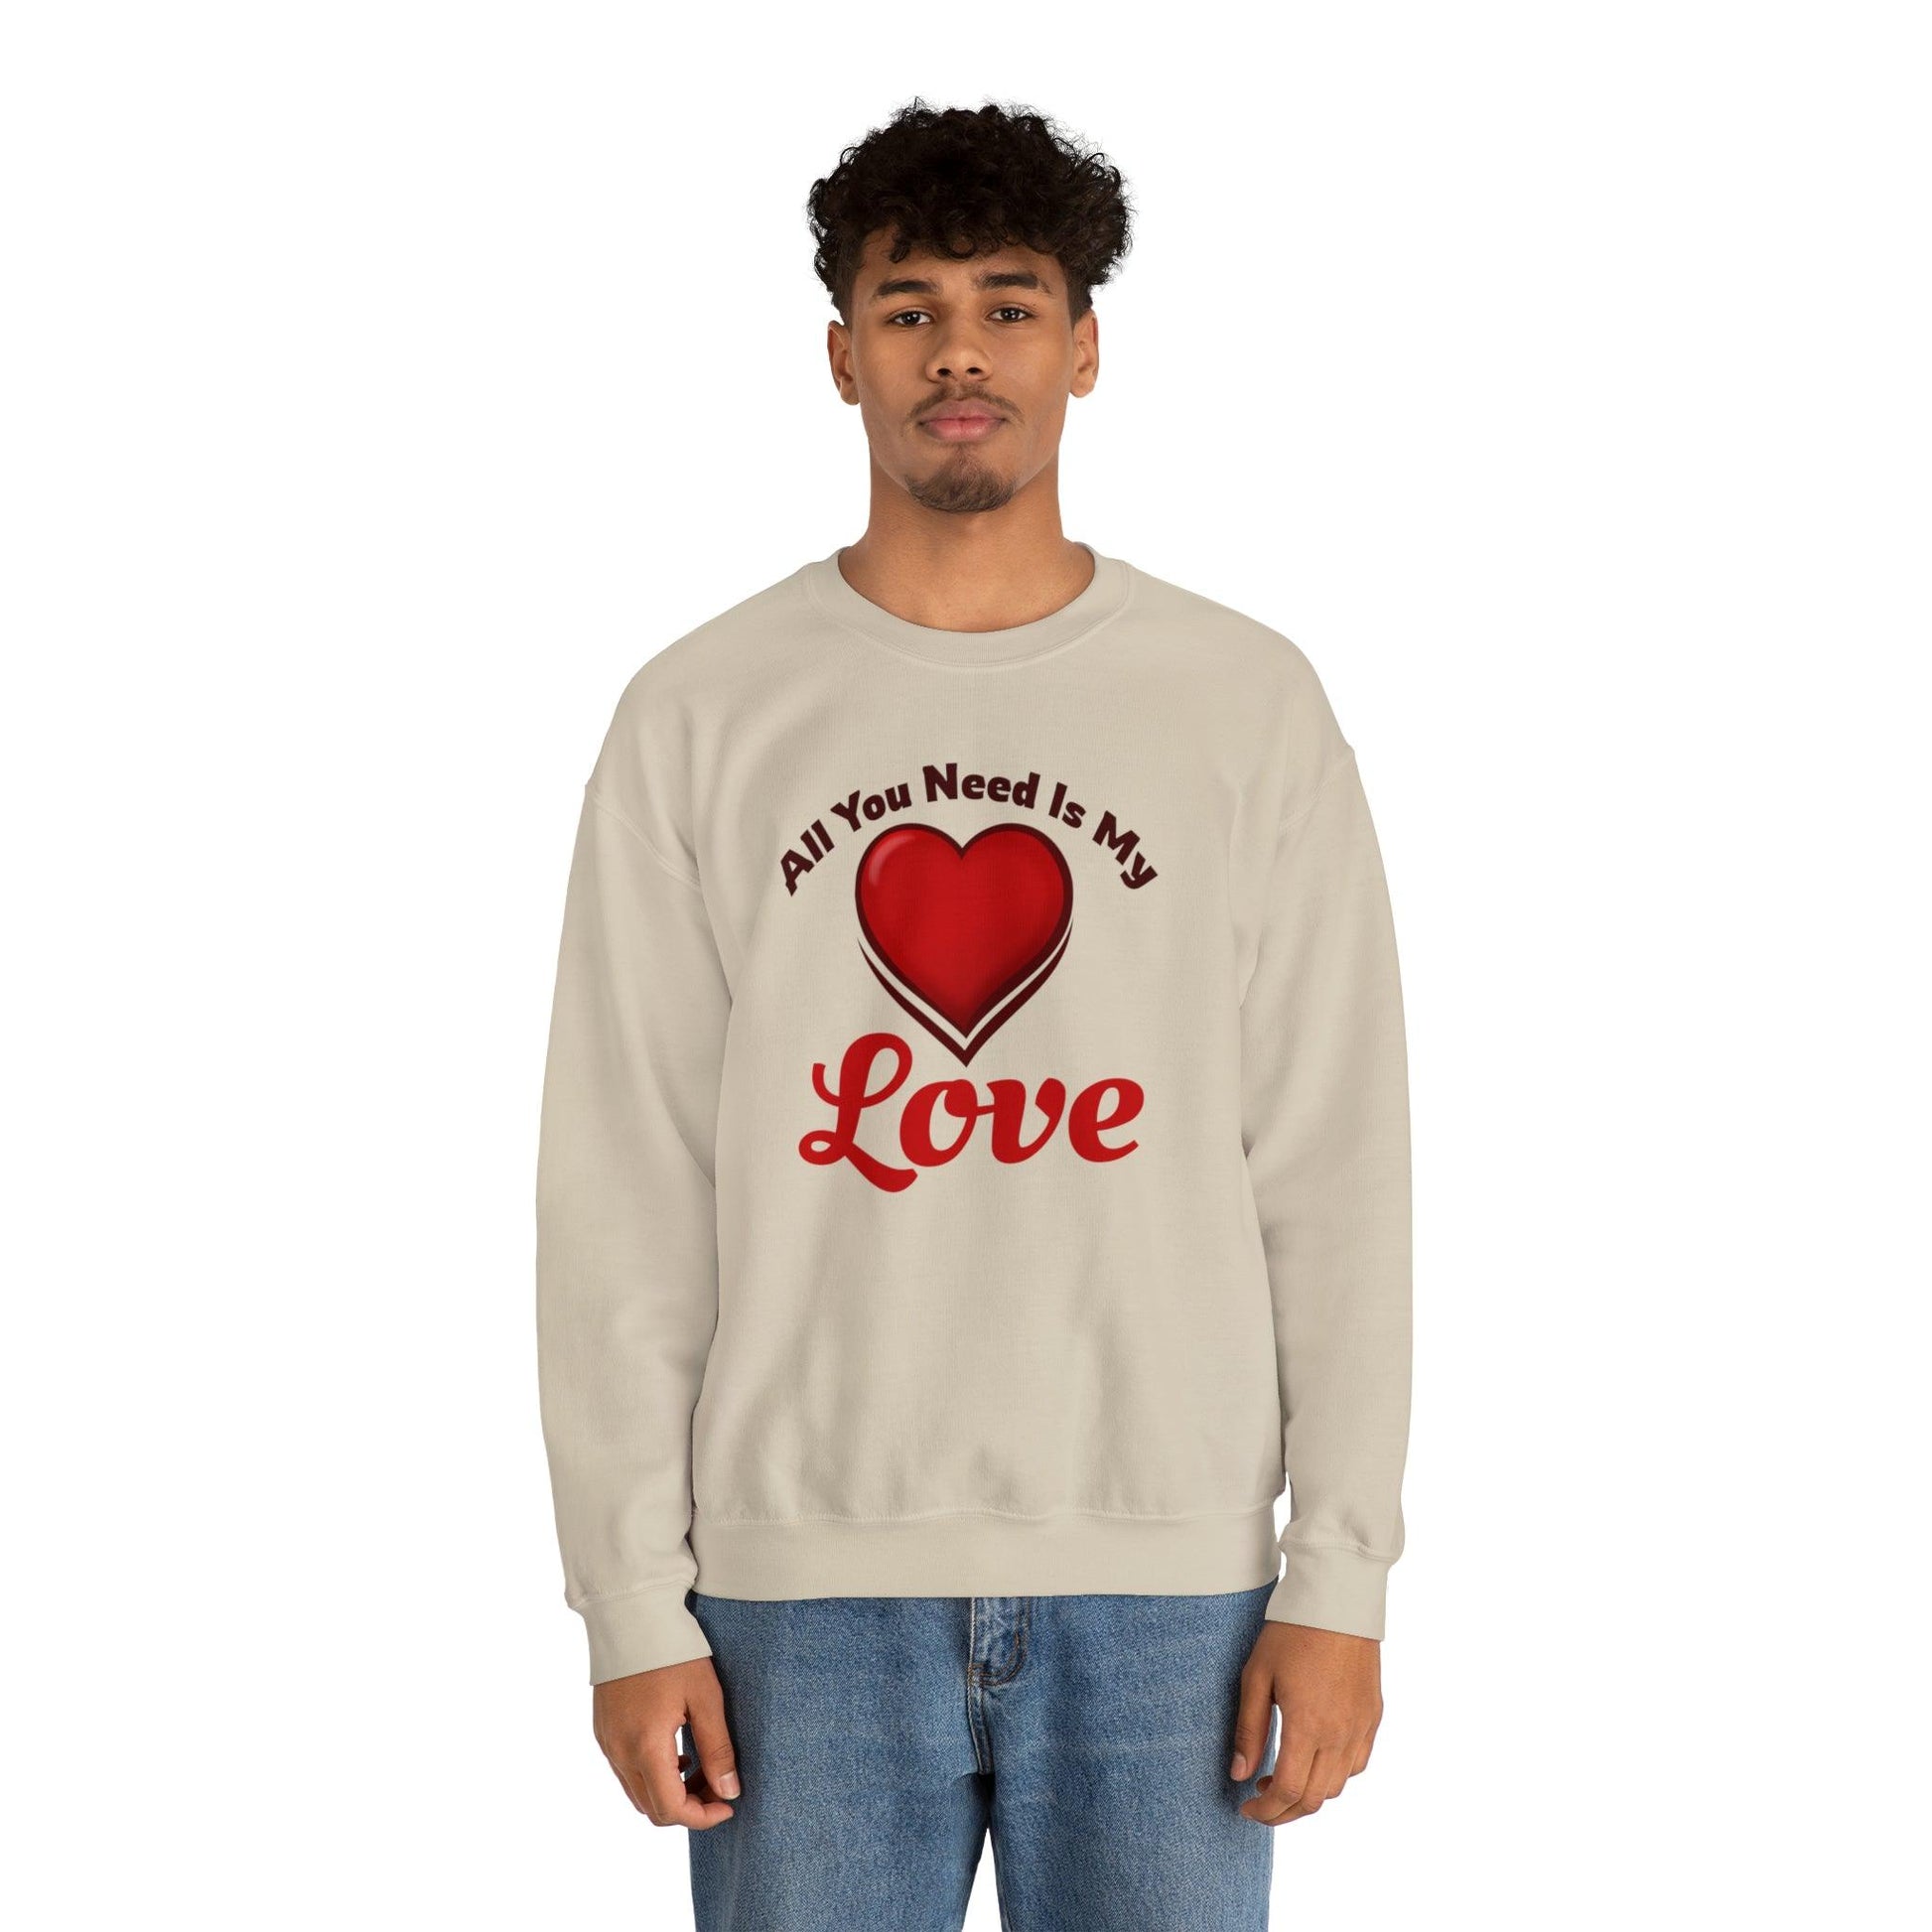 All you need is My Love Tee Hooded Sweatshirt - Giftsmojo